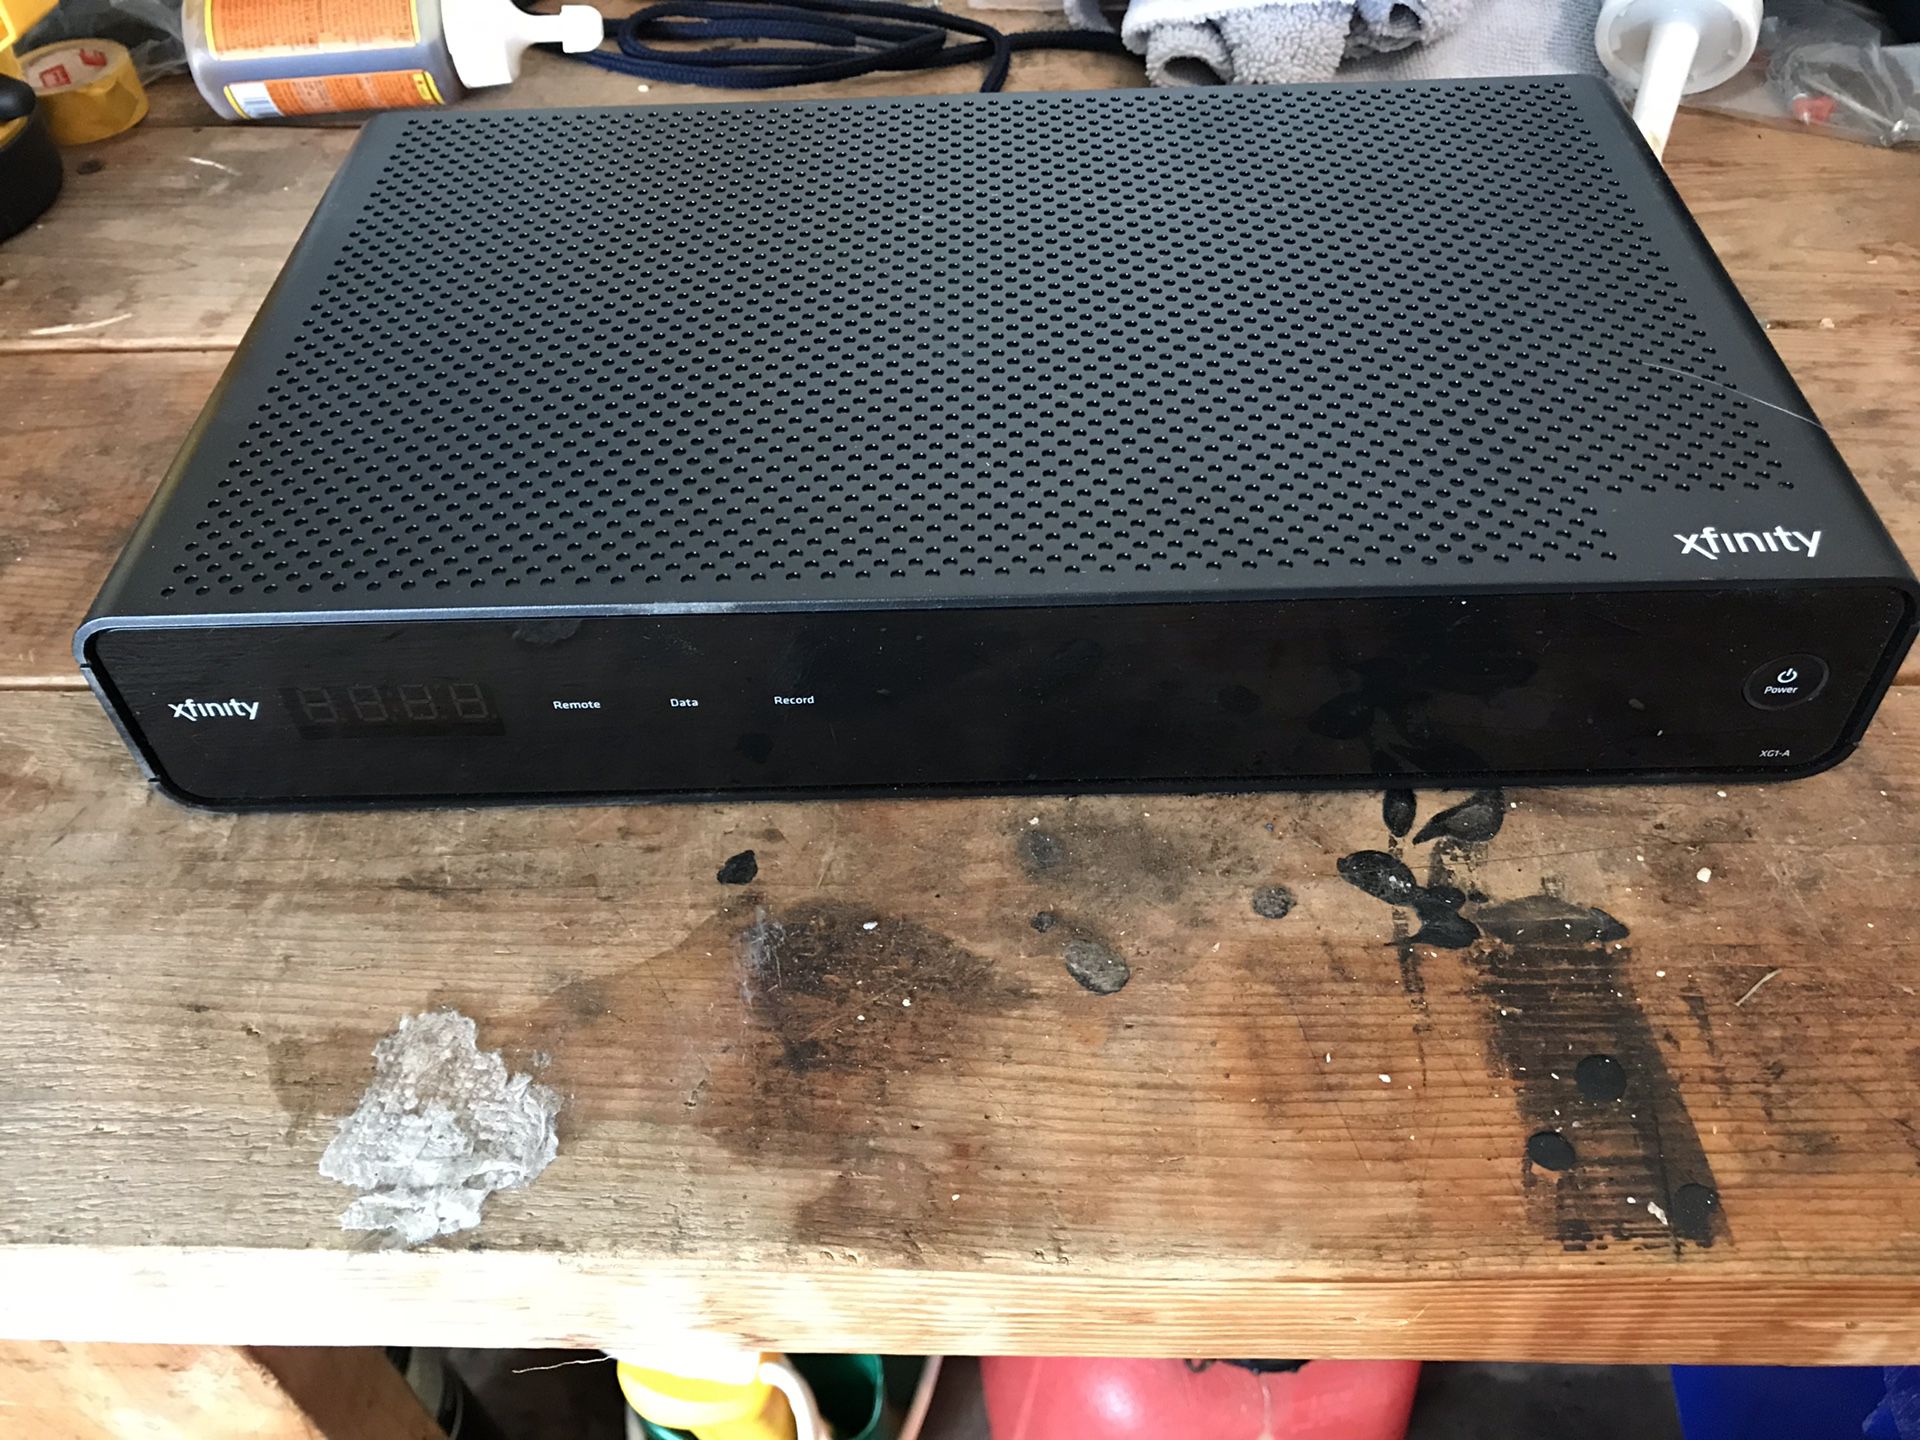 Xfinity XG1-A cable box